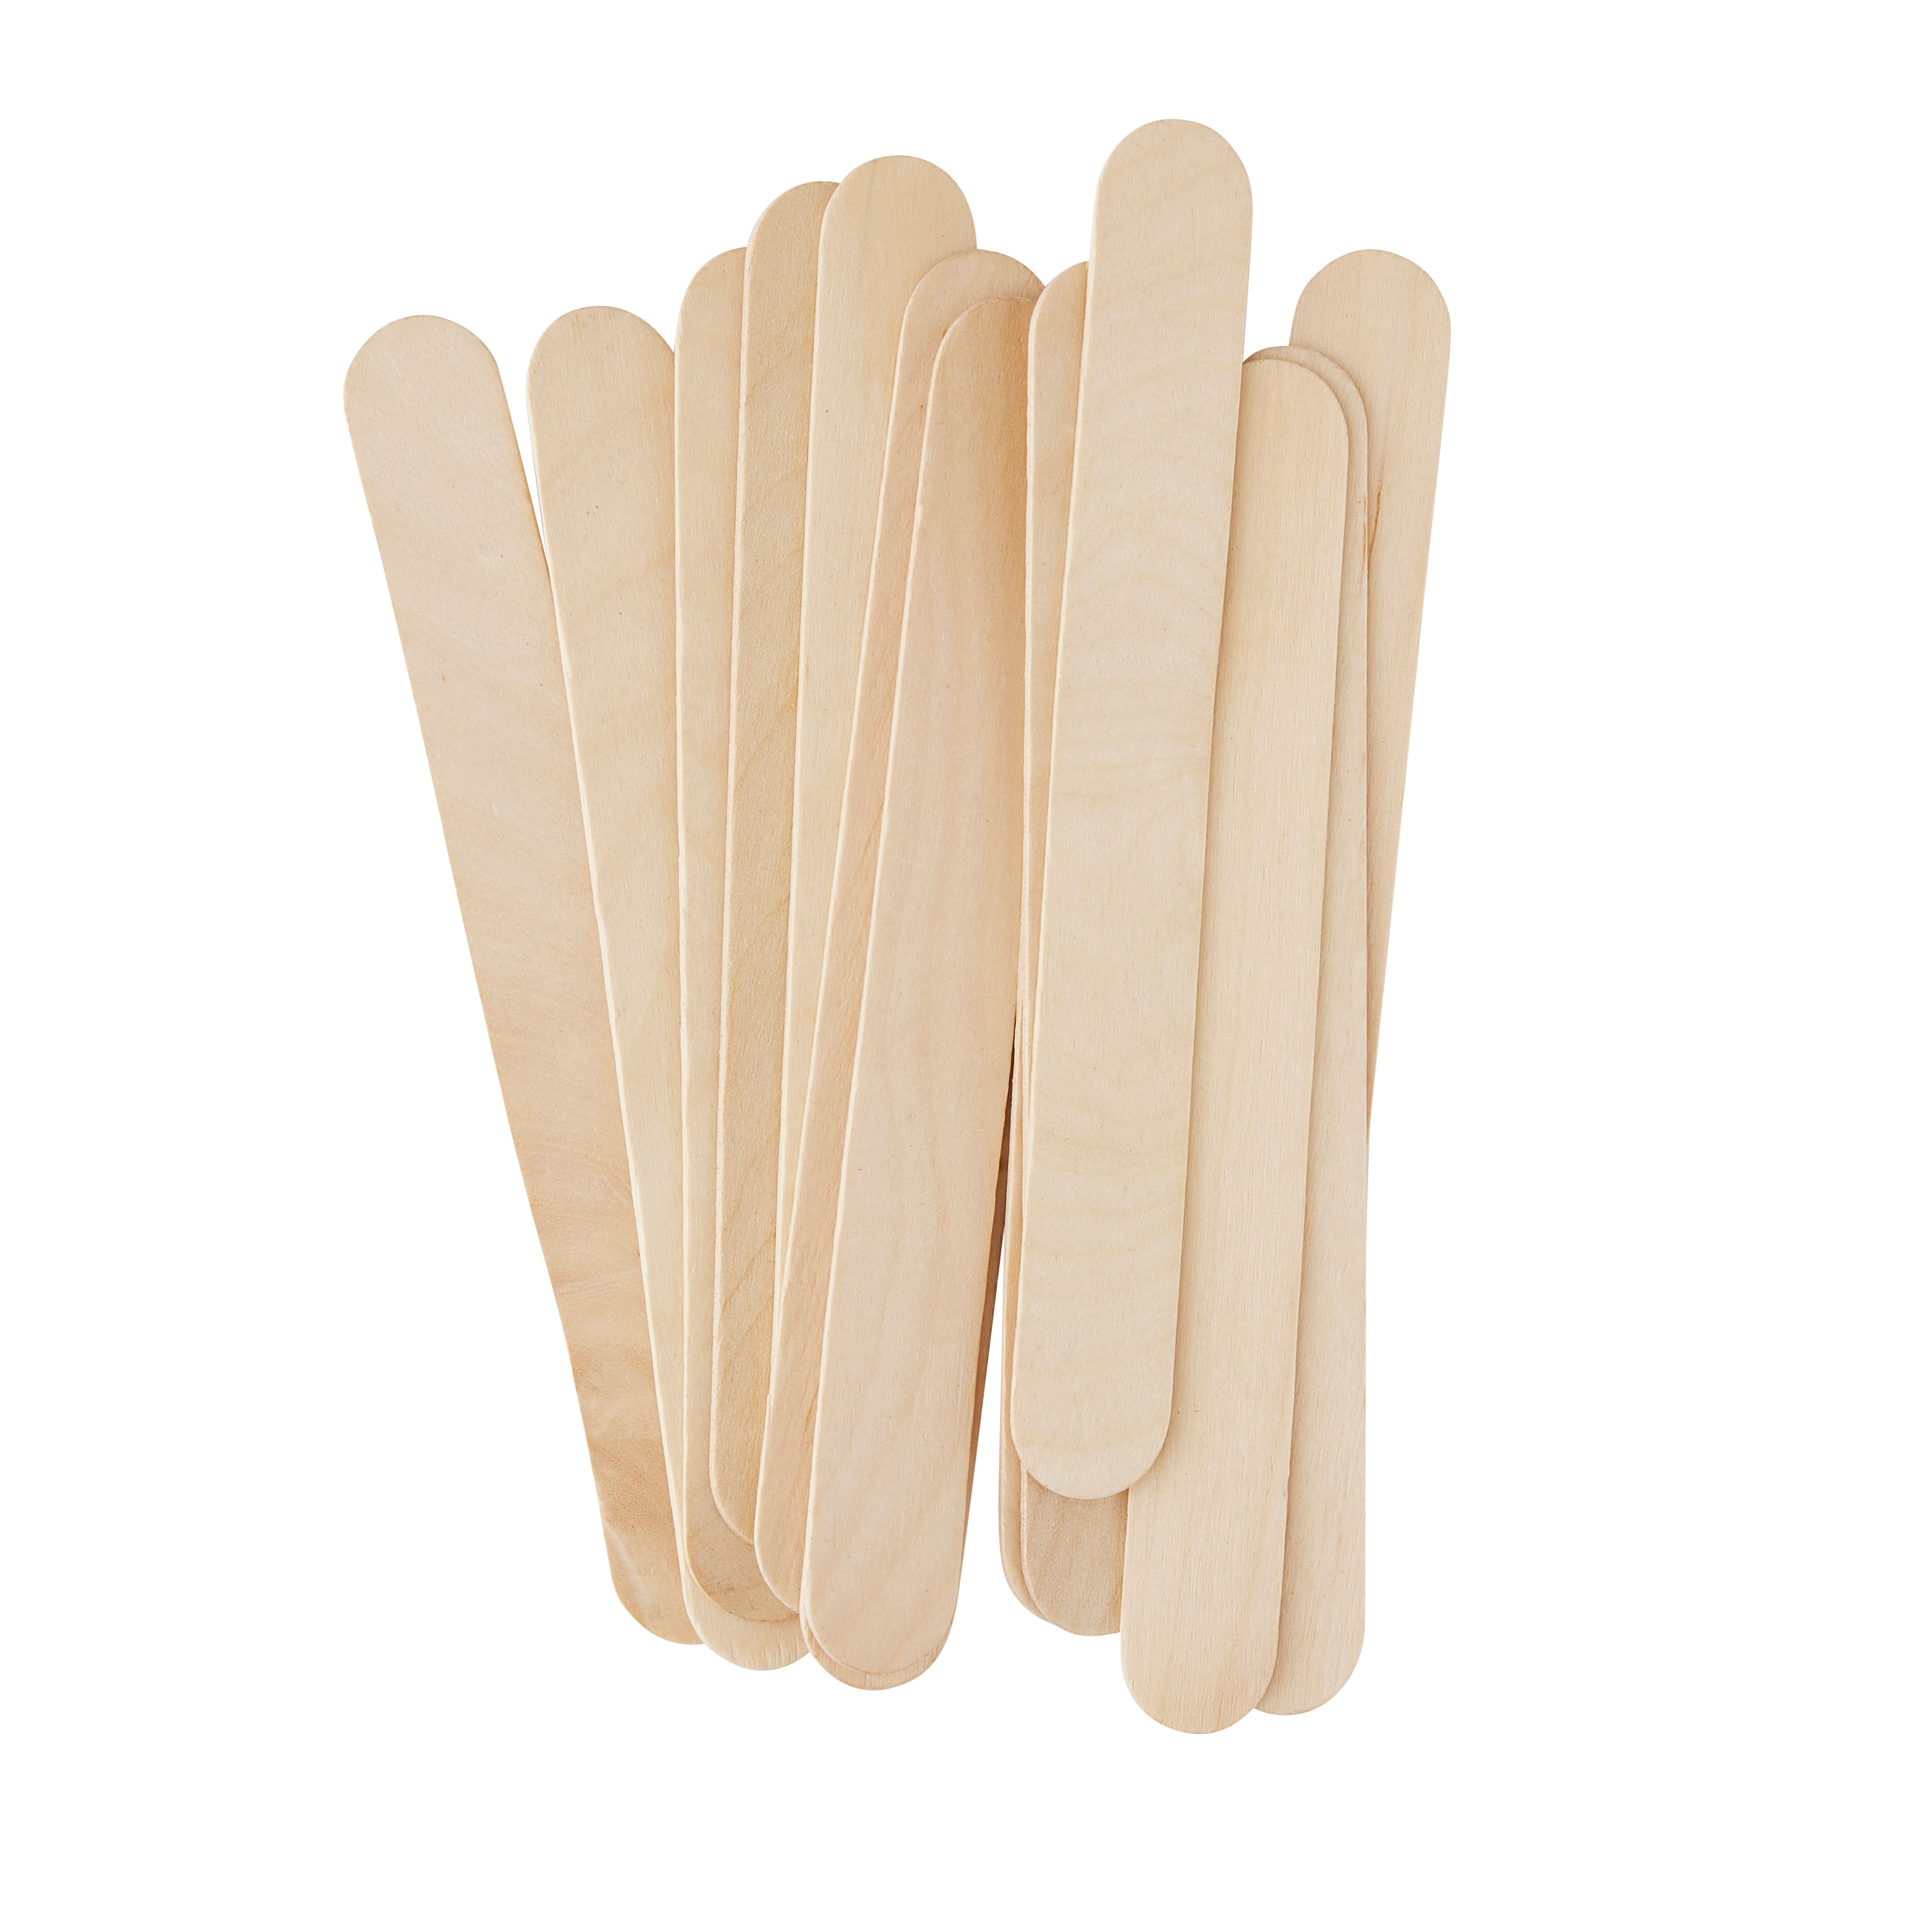 12 Packs: 30 ct. (360 total) Wavy Jumbo Wood Craft Sticks by Creatology®